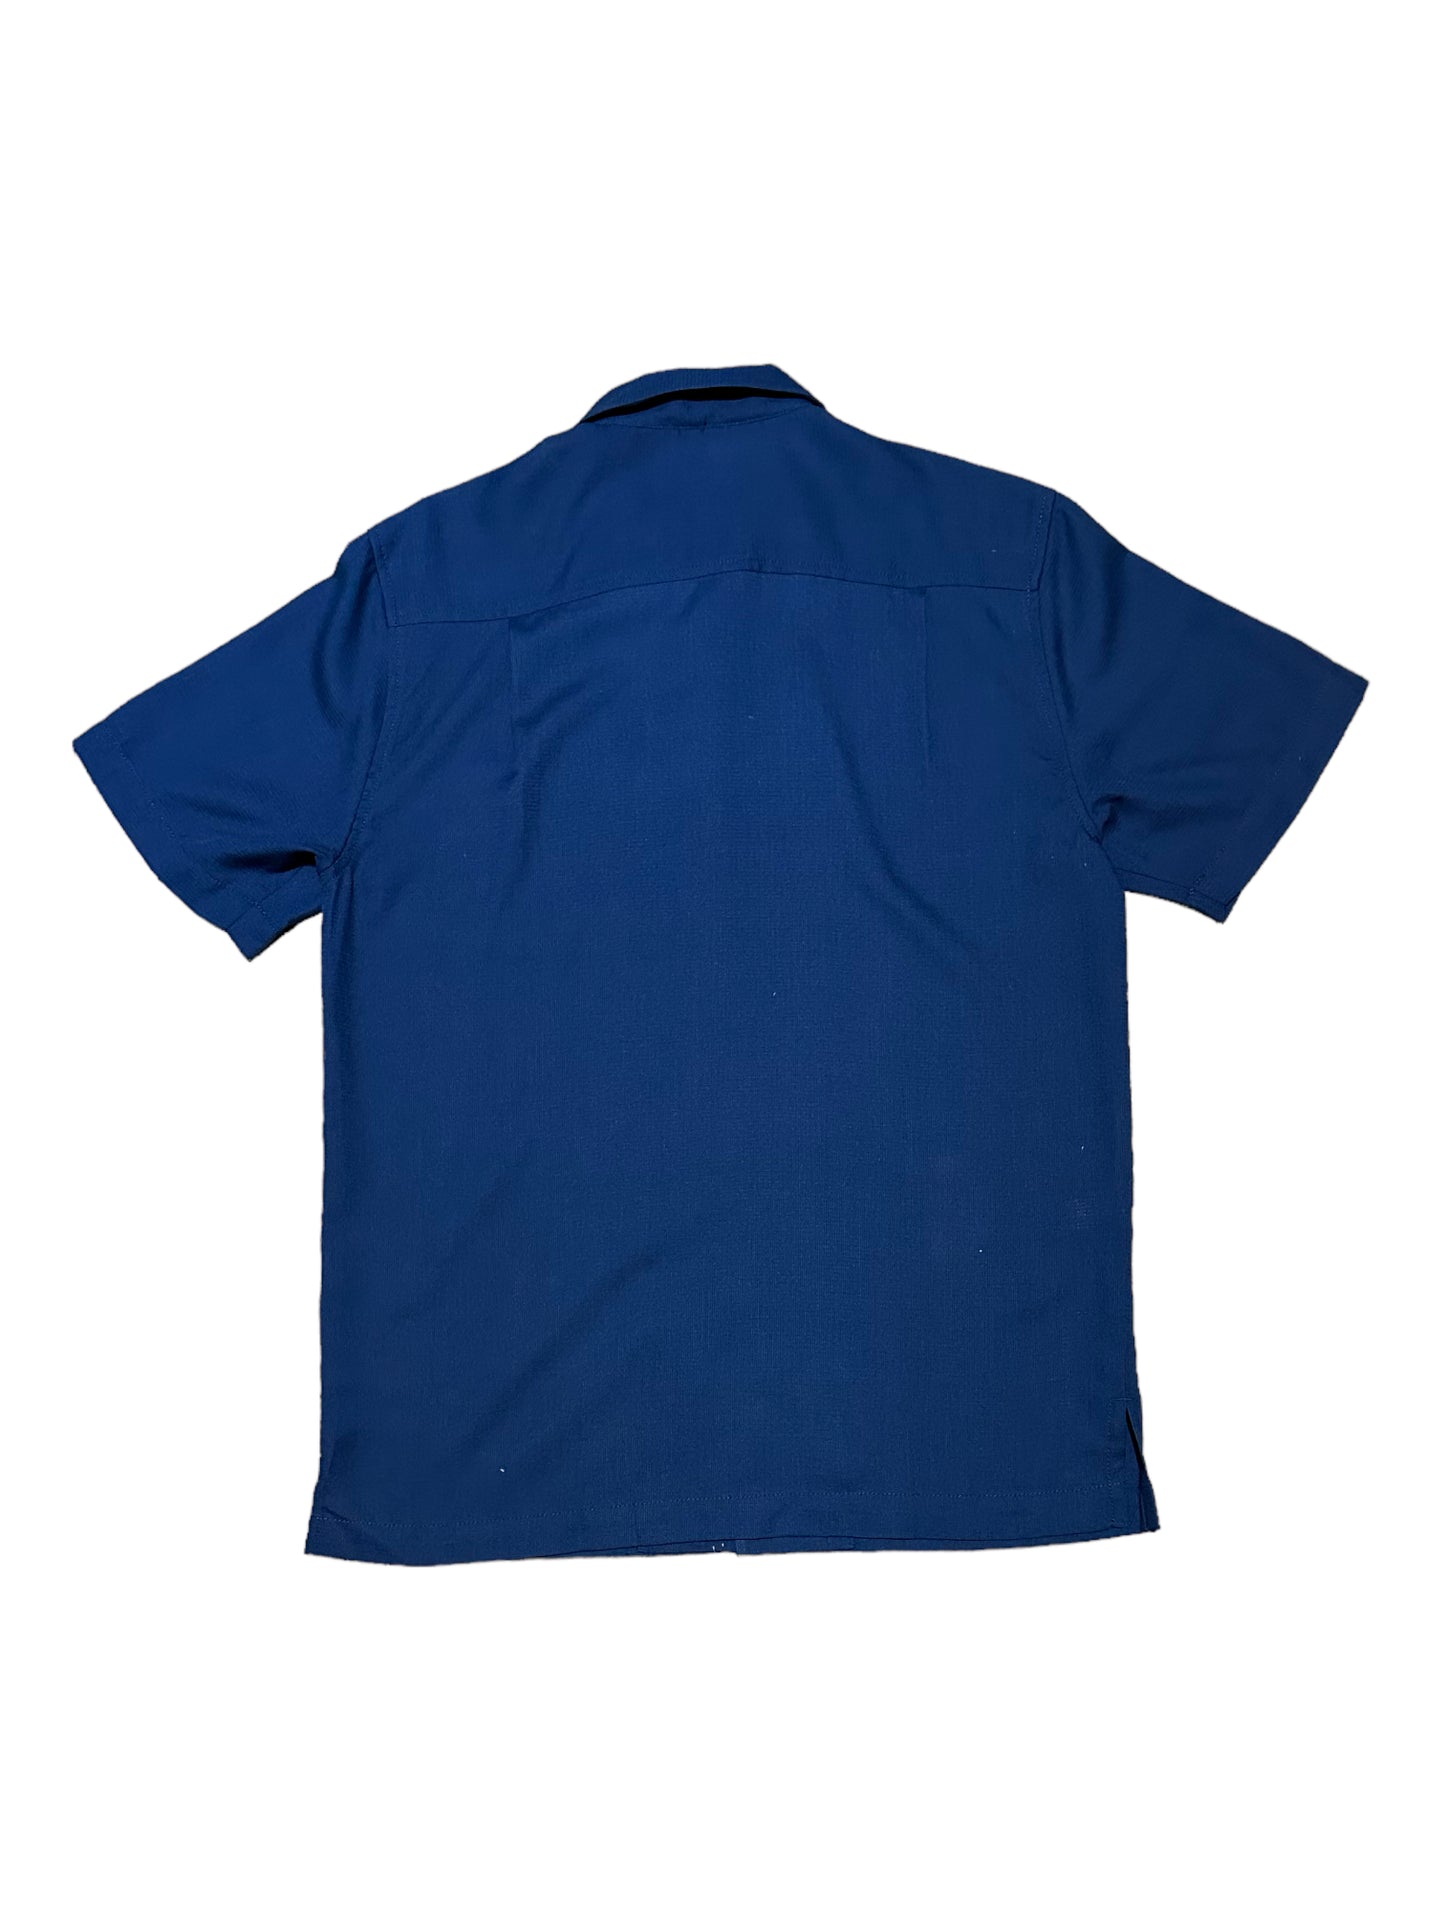 Tommy Bahama Navy Blue Silk Short Sleeve Button Up Casual Shirt